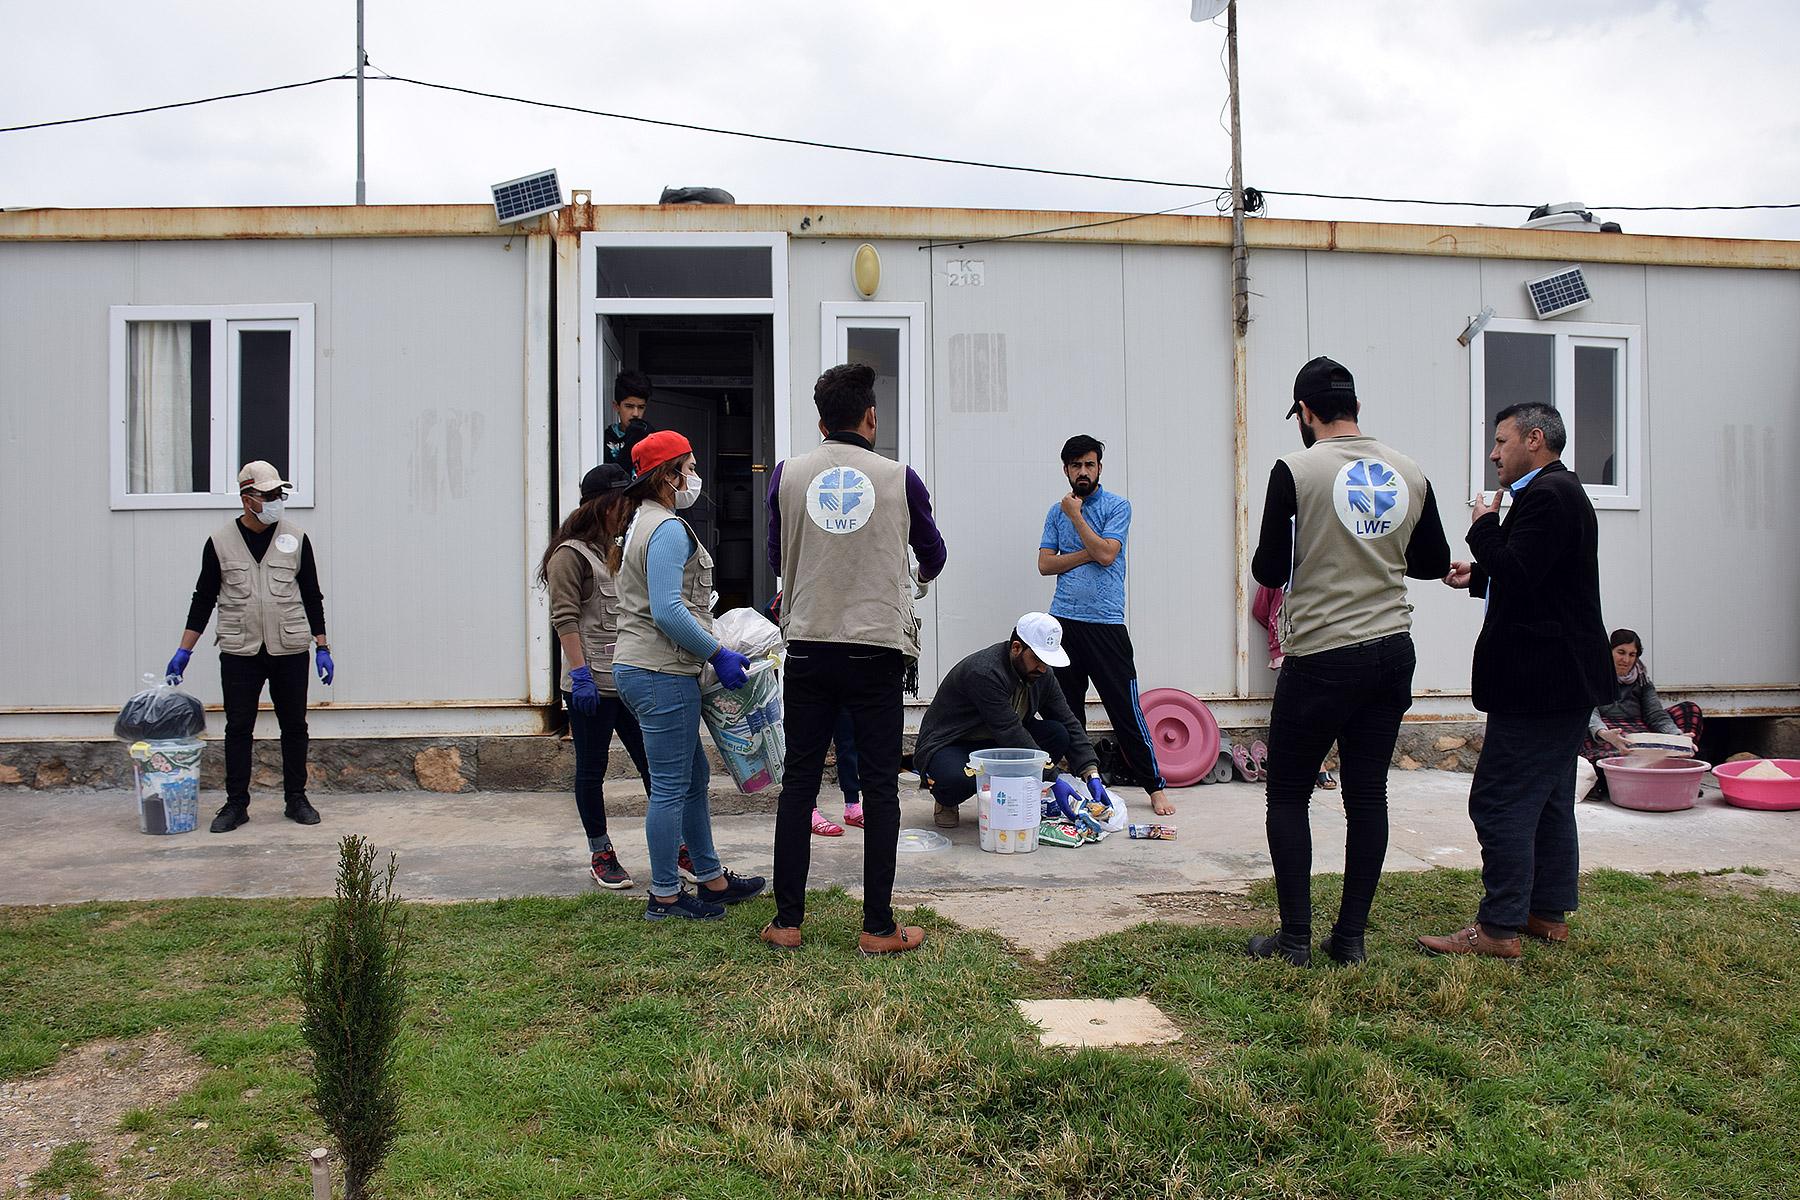 LWF staff distribute hygiene kits door-to-door to families living in Dawodiya IDP camp in northern Iraq. All Photos: LWF WS Iraq